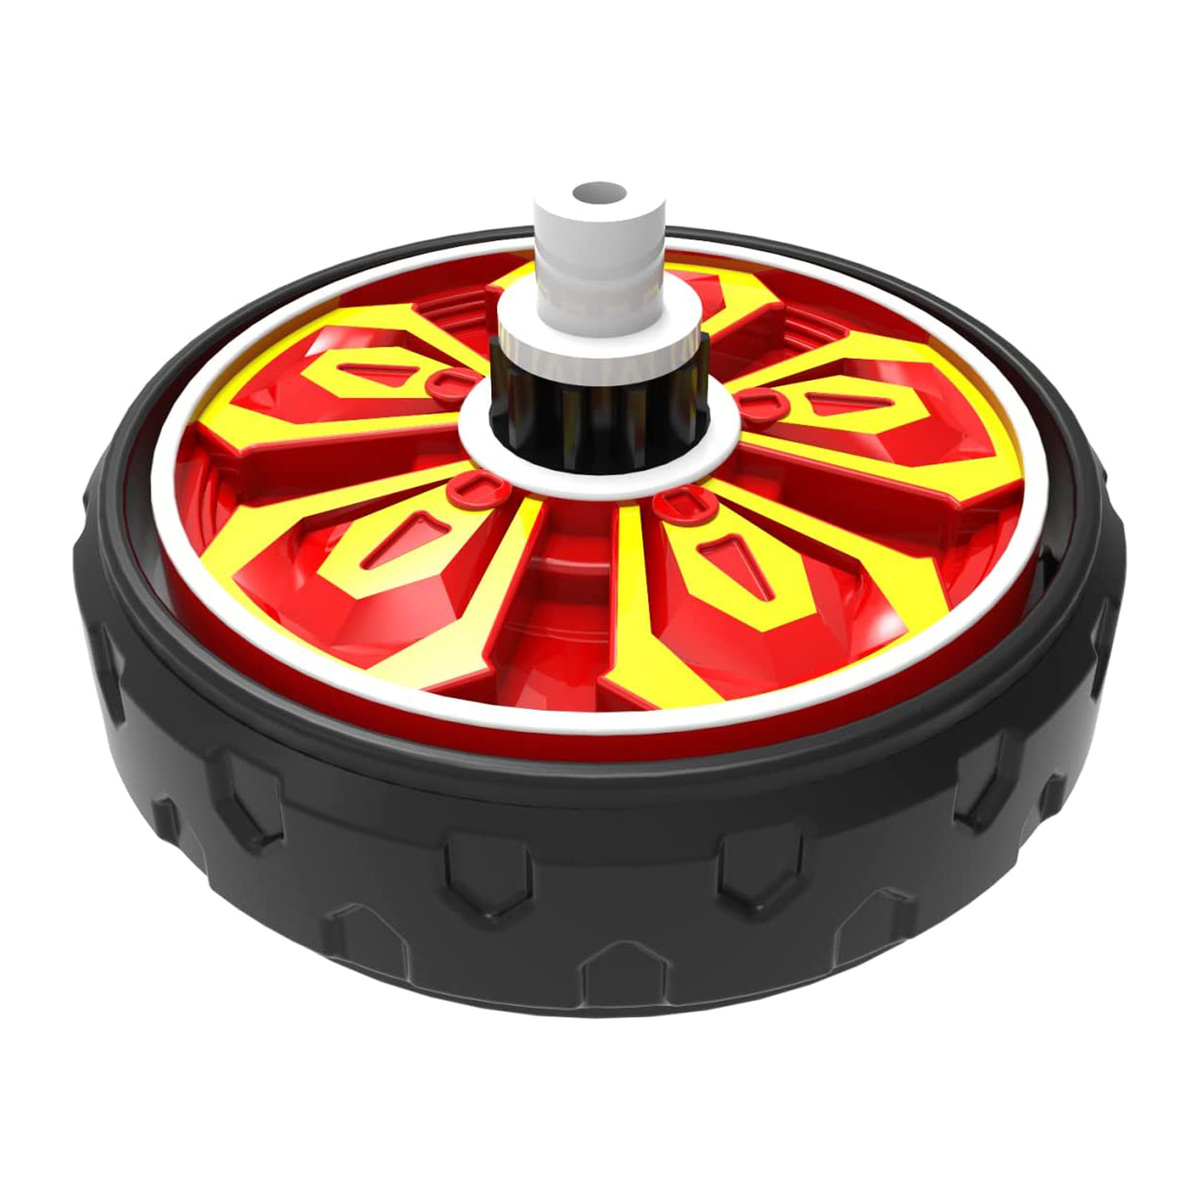 Kidland Spin Fighters 5 Cracking Nebula Spinner Toy, MT0104